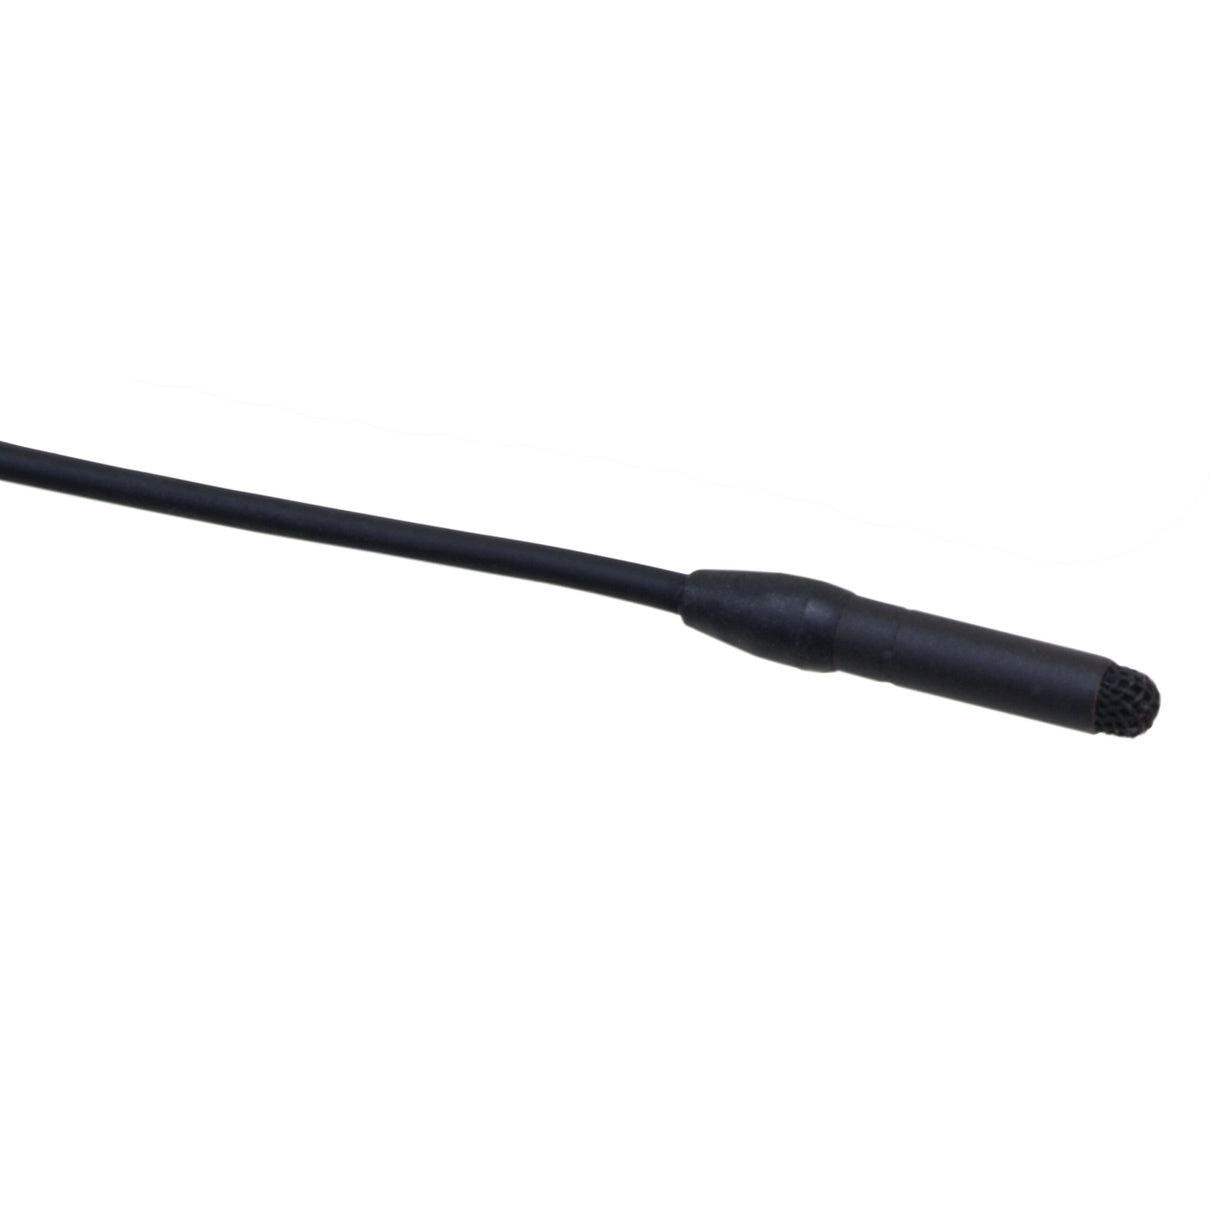 Sanken COS-11D-PT-AL-3.0-BK Omnidirectional Lavalier Microphone without Accessories, Black, Pigtail, Normal Sensitivity, 3m Stripped Cable